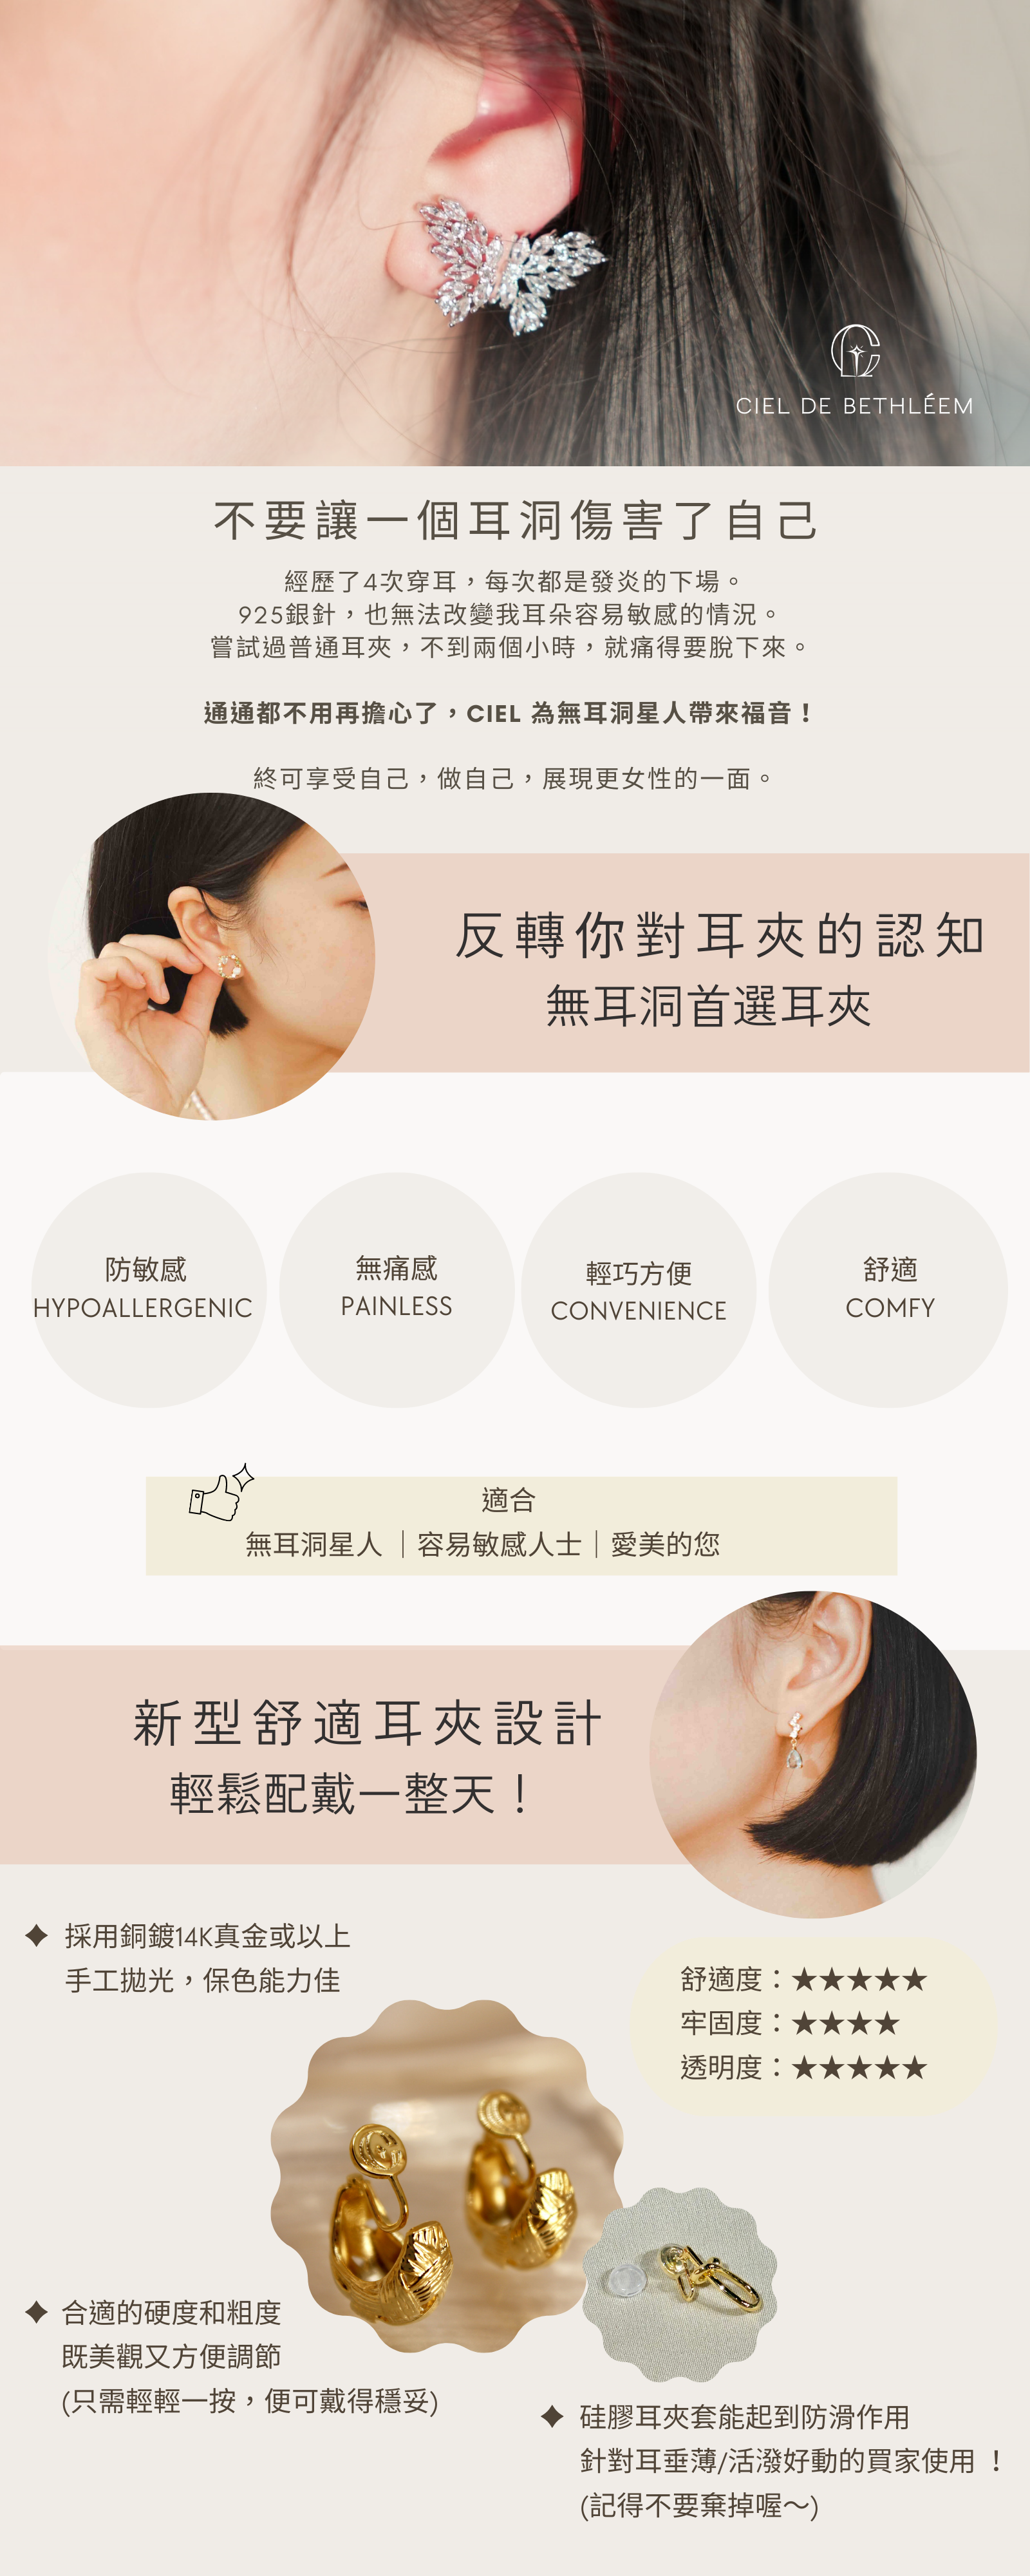 Ciel de Bethléem 是香港的耳夾專門店。我們的耳夾都是特別訂製，讓人戴得舒適、零痛感，特別針對容易敏感或無耳洞人士而設計，除去傳統耳夾所帶來的痛楚，免受穿耳所帶來的風險。我們自家設計耳夾系列更是考慮到人體工學設計，剛剛好的弧度，完美貼合你柔軟的耳朵，符合你的耳型，給你一種訂製的感覺。同時我們不斷搜羅具設計感的款式，以達致美與舒適並重。